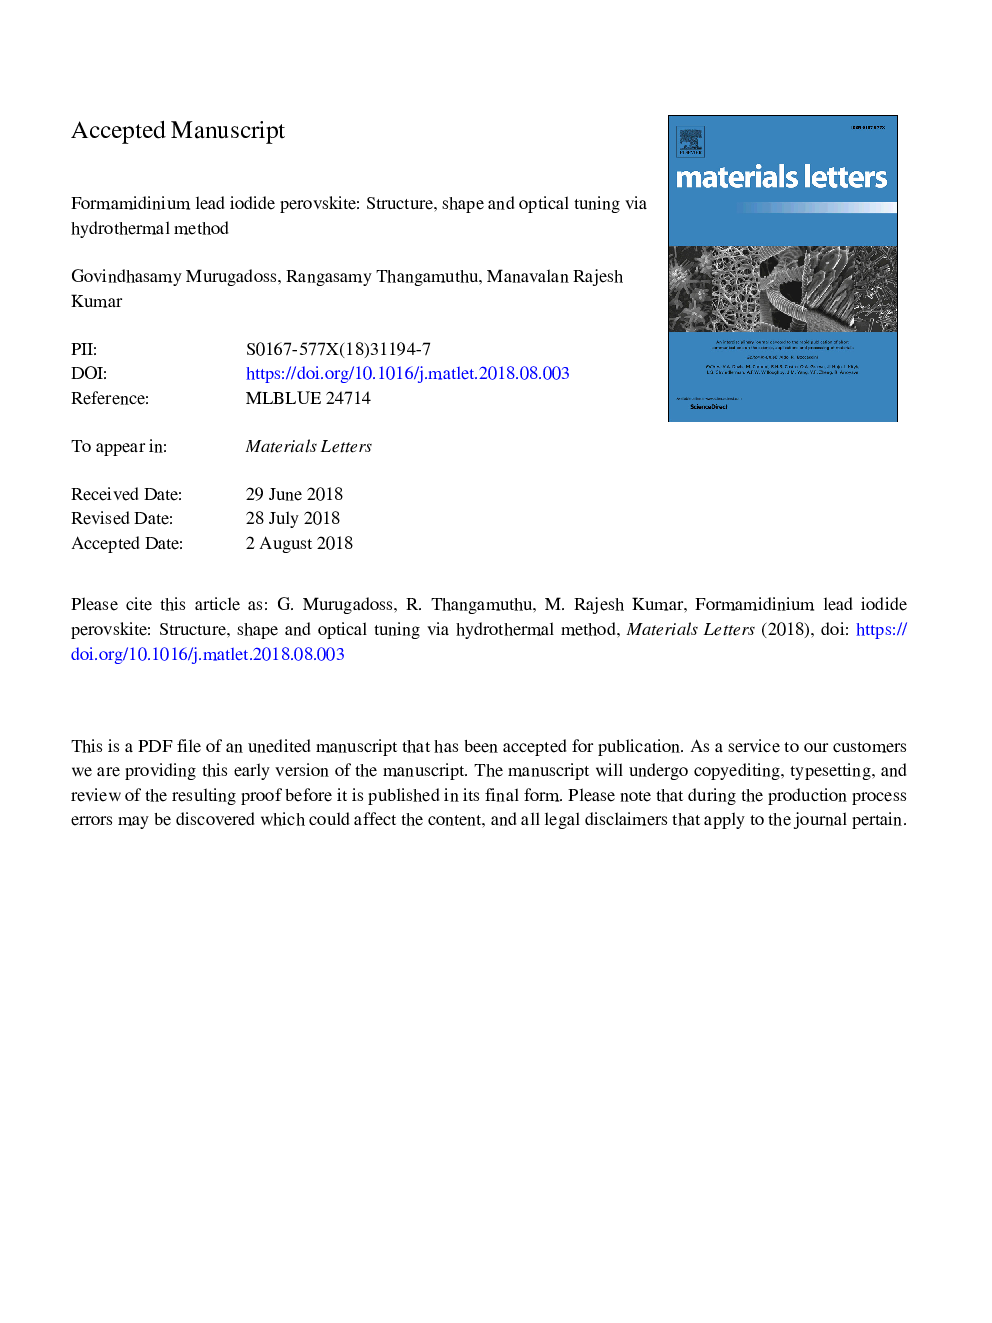 Formamidinium lead iodide perovskite: Structure, shape and optical tuning via hydrothermal method